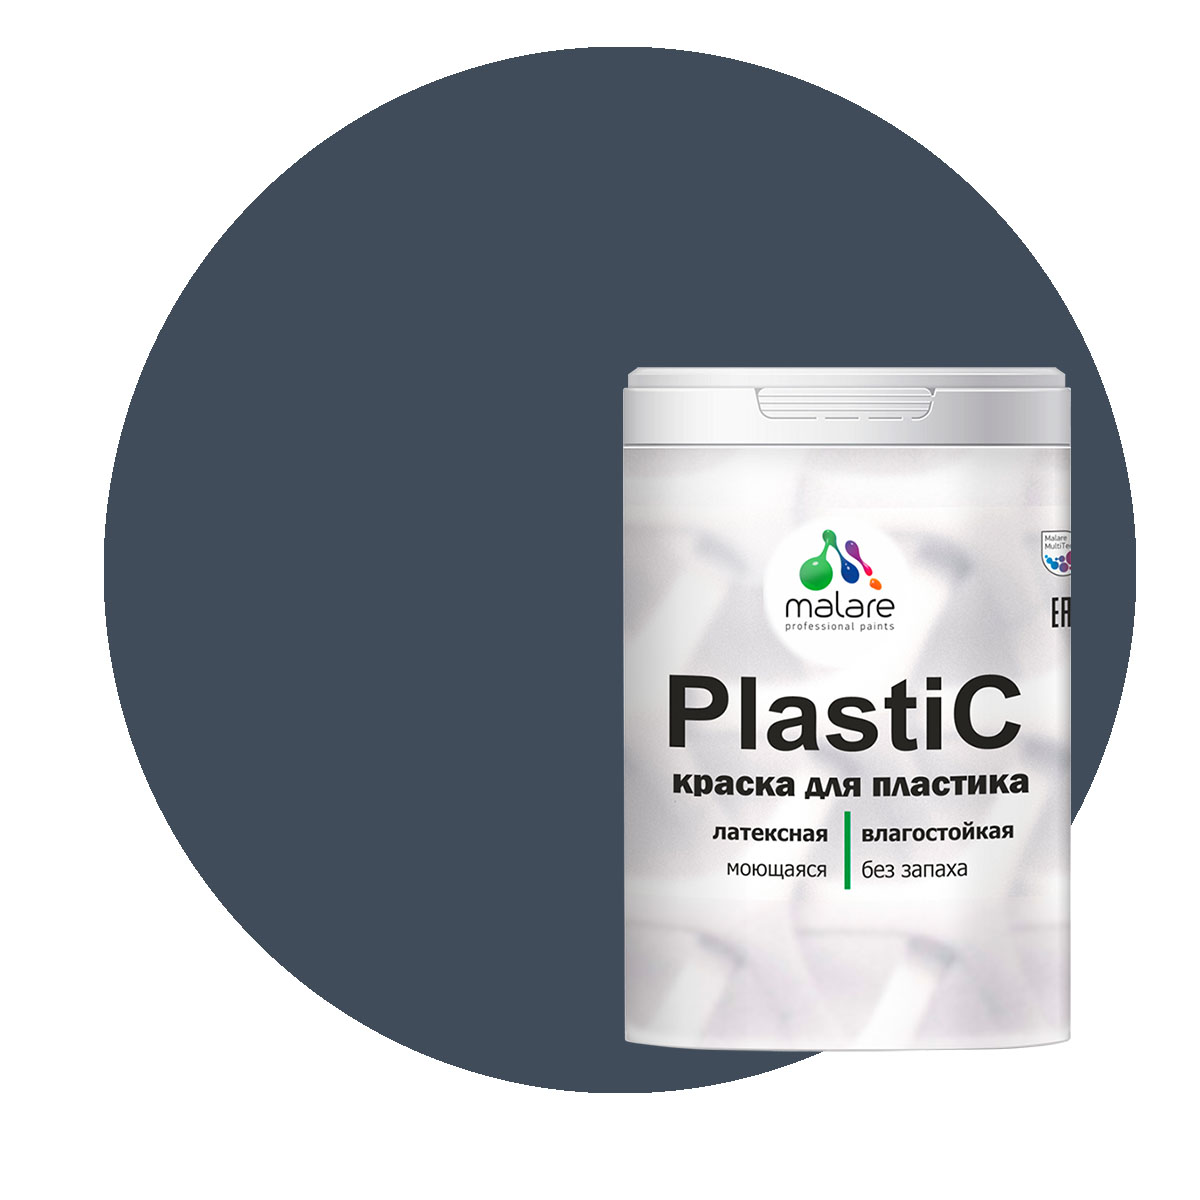 Краска Malare PlastiC для пластика, ПВХ, для сайдинга, гранитный, 2 кг. краска malare plastic для пластика пвх для сайдинга парное молоко 10 кг